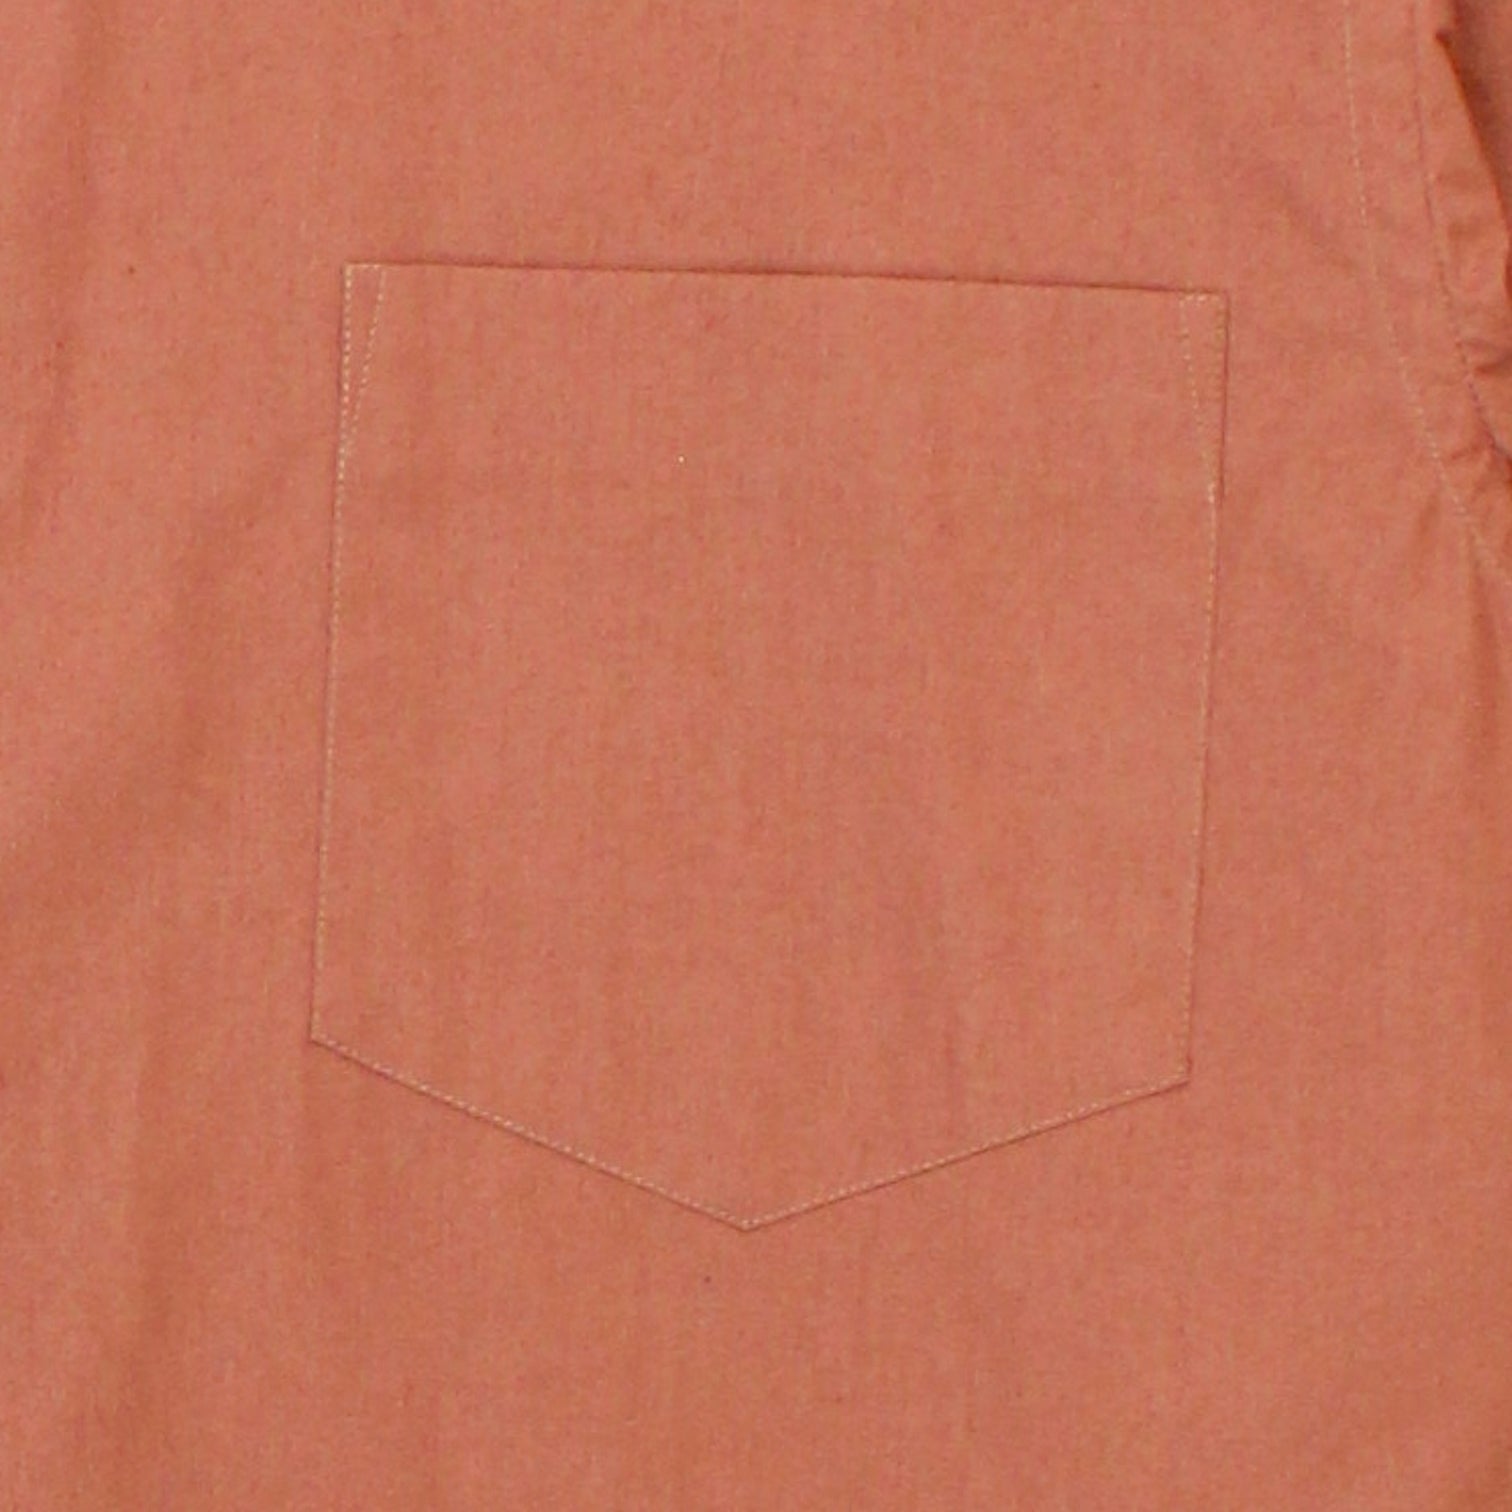 Studio Nicholson Medina Pink Shirt